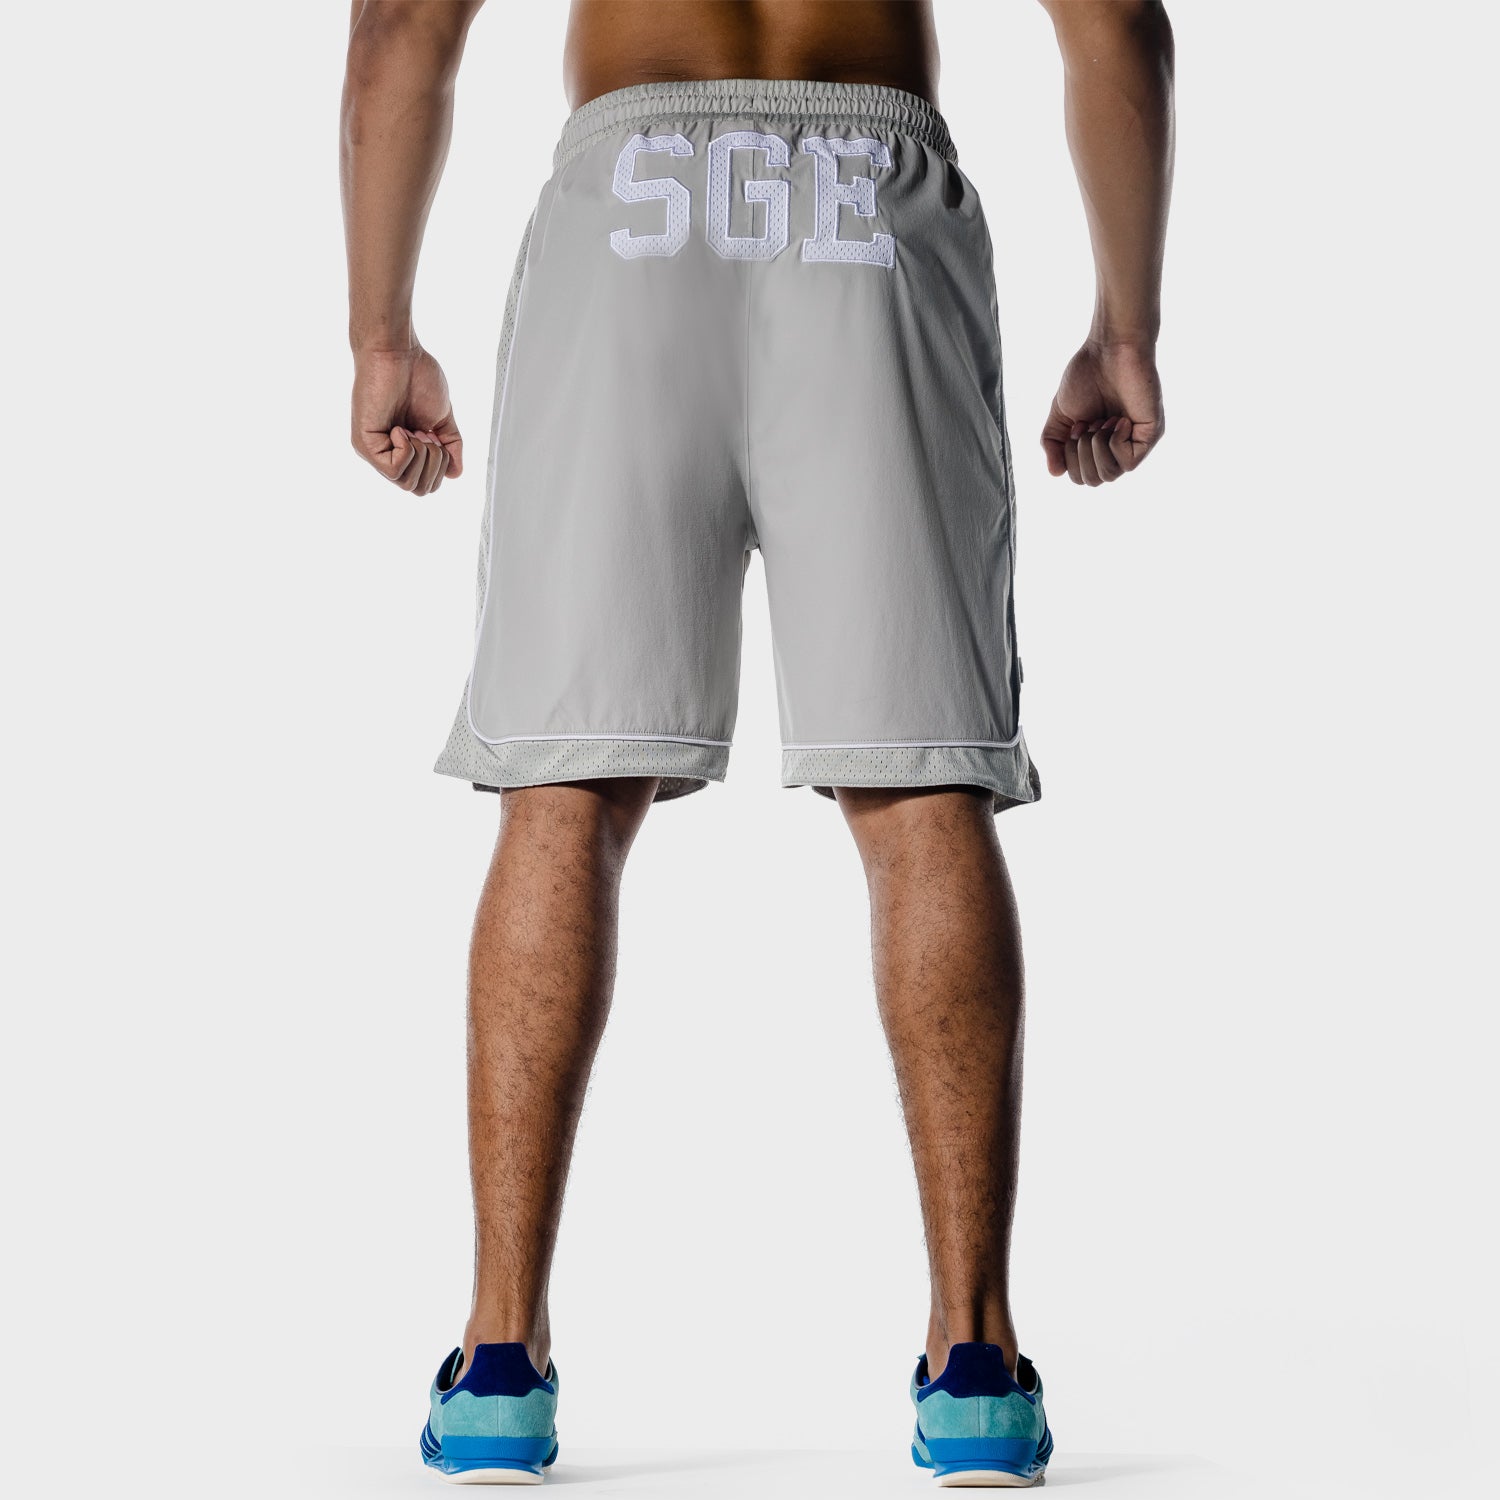 squatwolf-gym-wear-golden-era-basketball-shorts-grey-workout-shorts-for-men